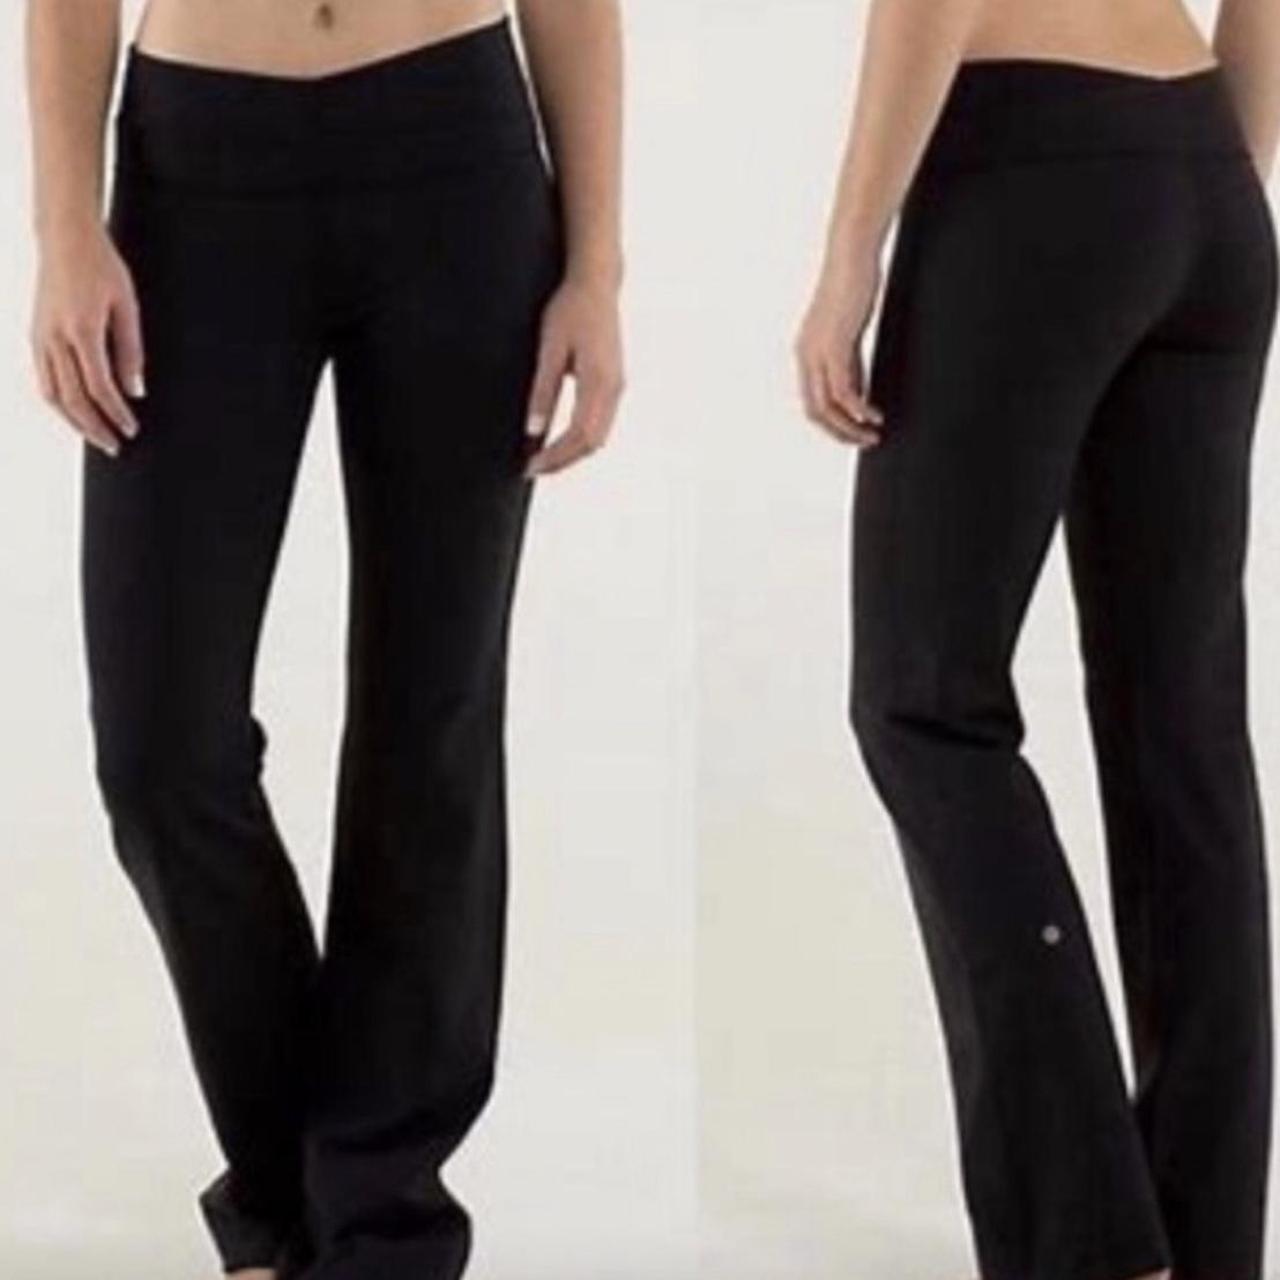 Yogalicous flared yoga pants with seam split leg - Depop